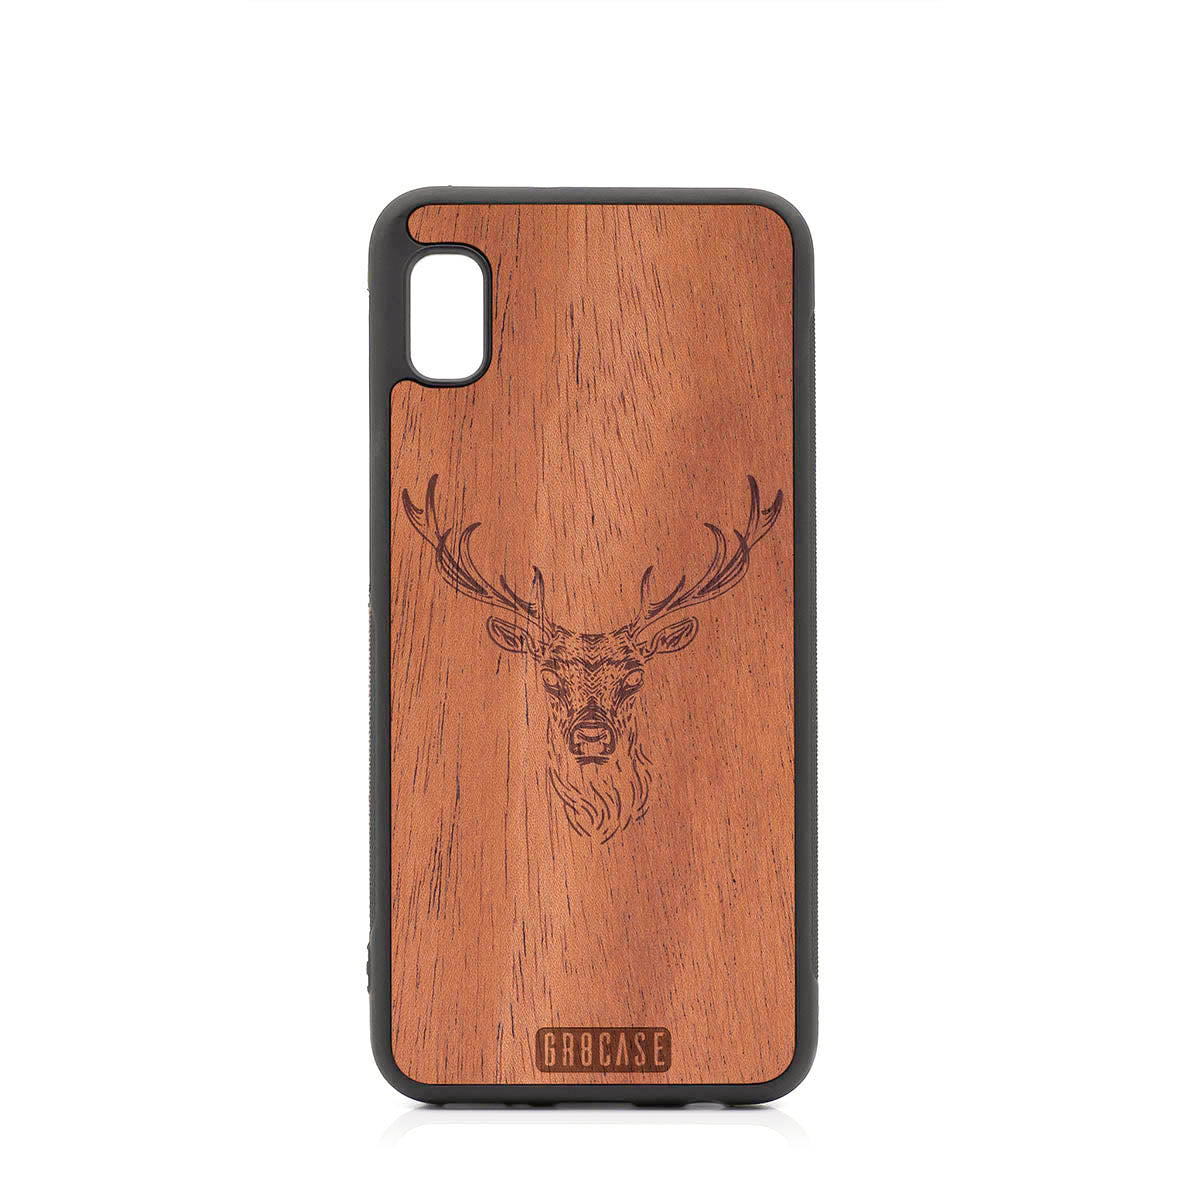 Elk Buck Design Wood Case For Samsung Galaxy A10E by GR8CASE